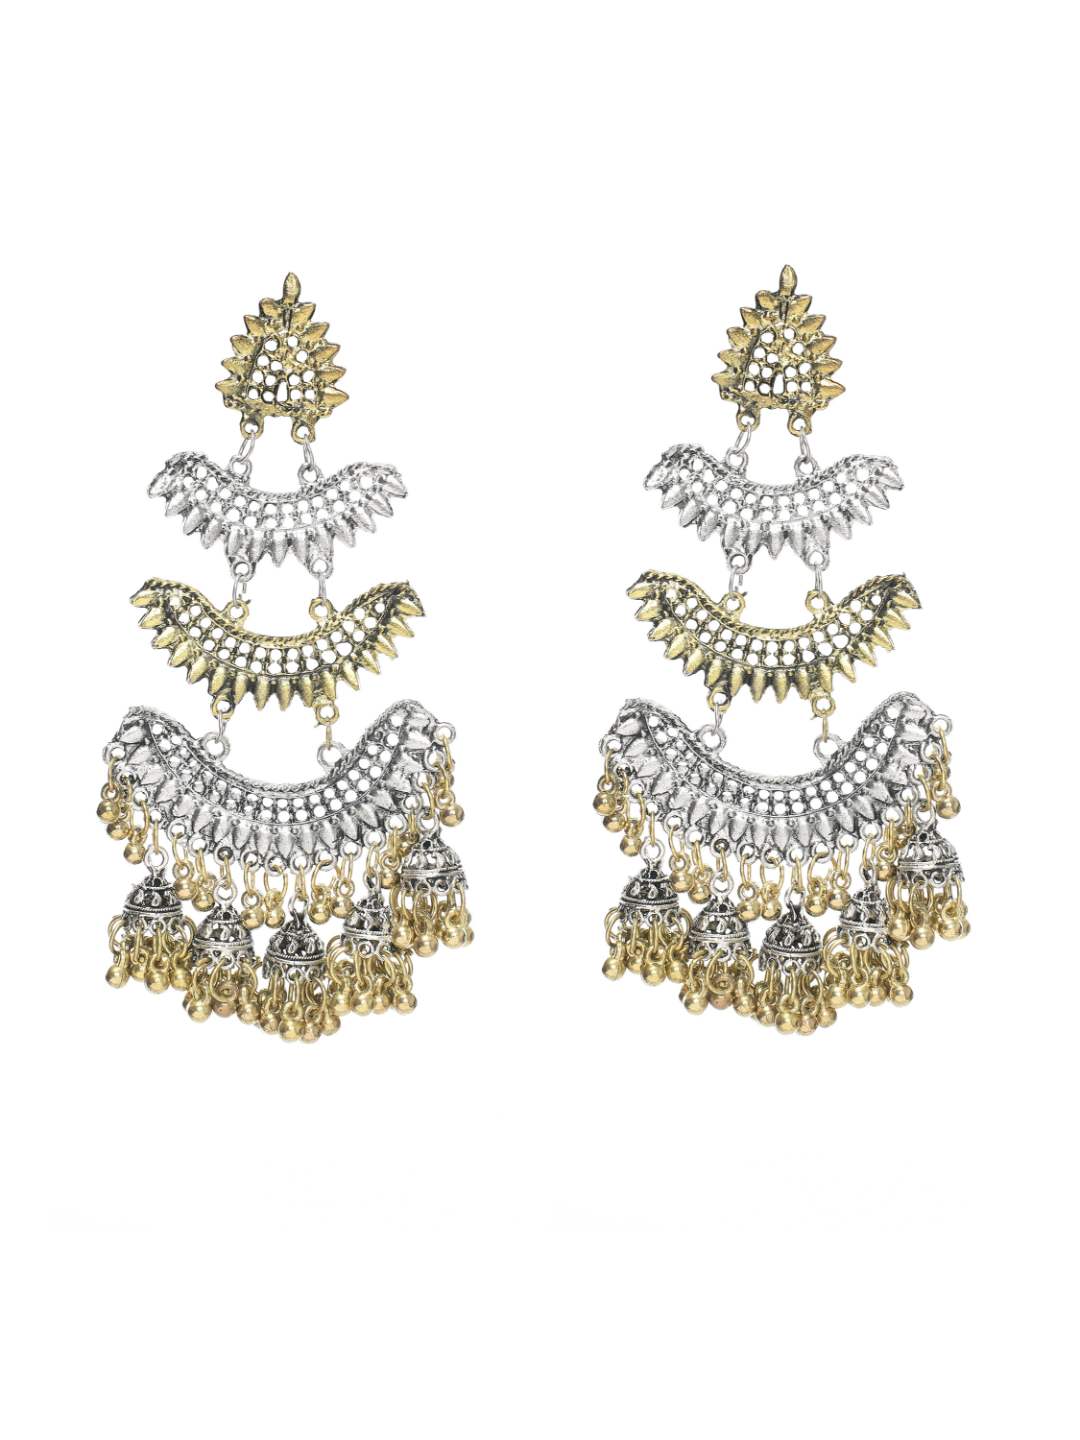 Johar Kamal Beautiful Silver & Gold Earrings with Jhumkas Design Jker_086